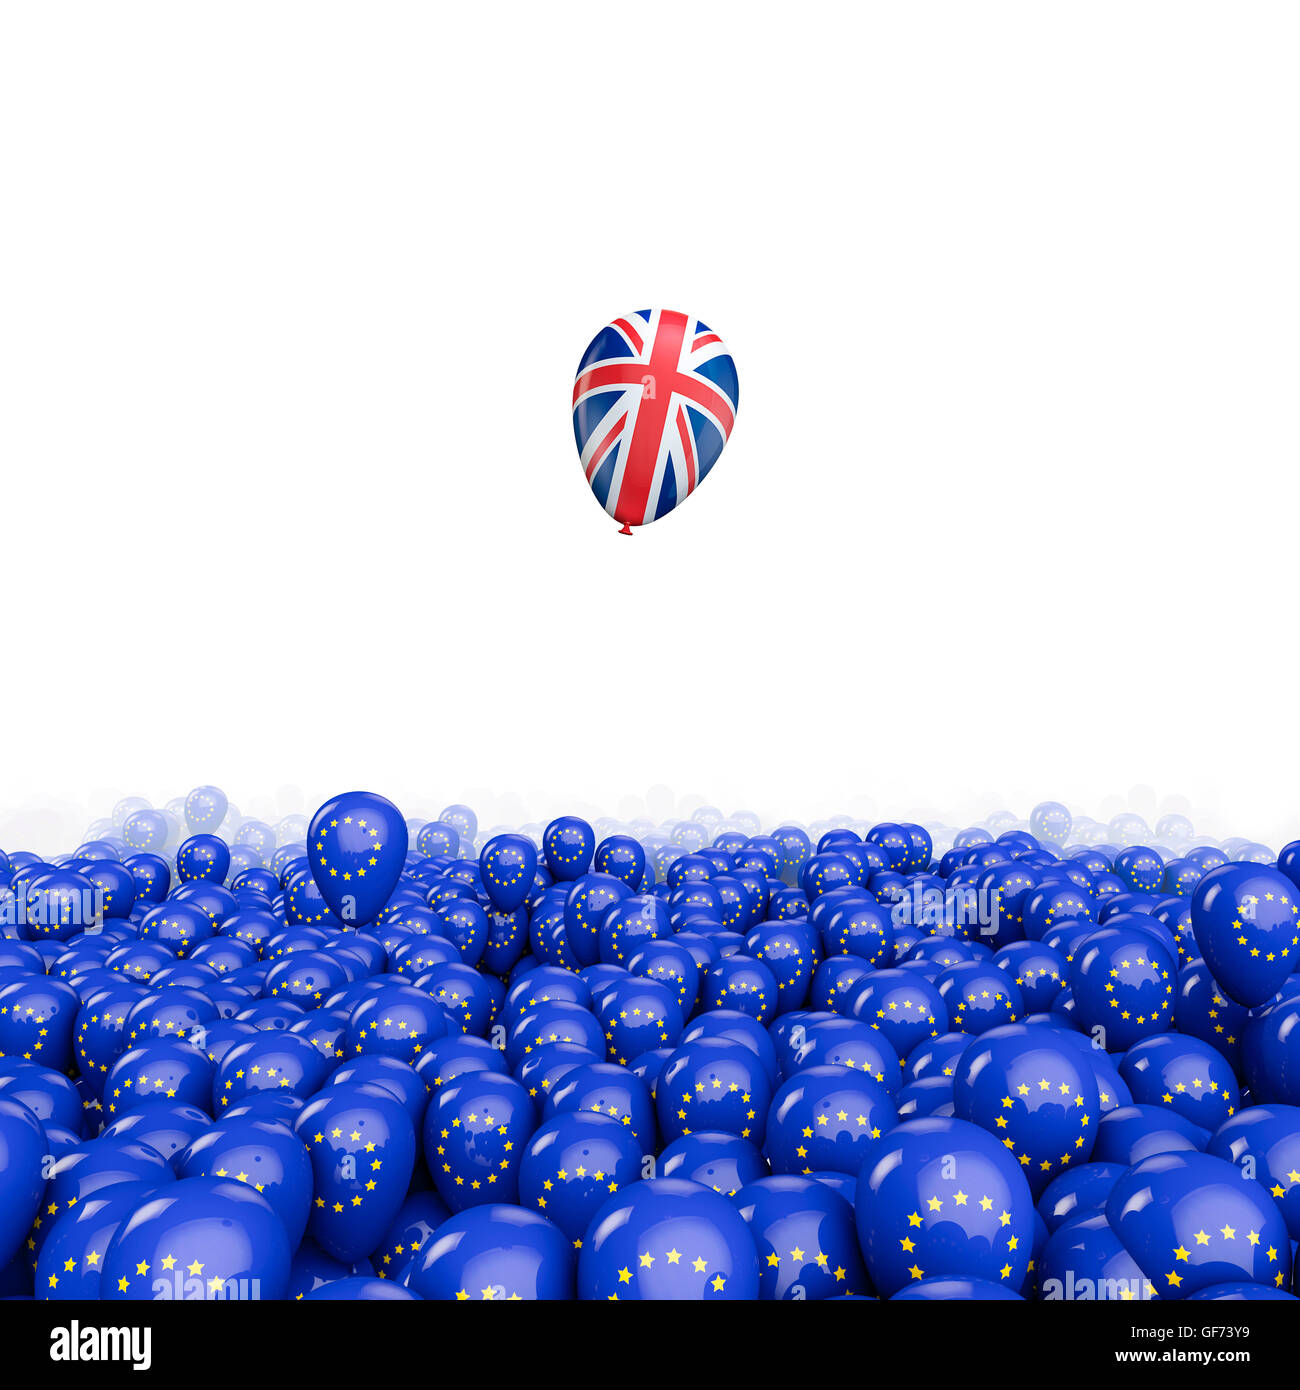 Brexit balloon flight / 3D illustration of EU balloons and UK flag balloon floating free Stock Photo